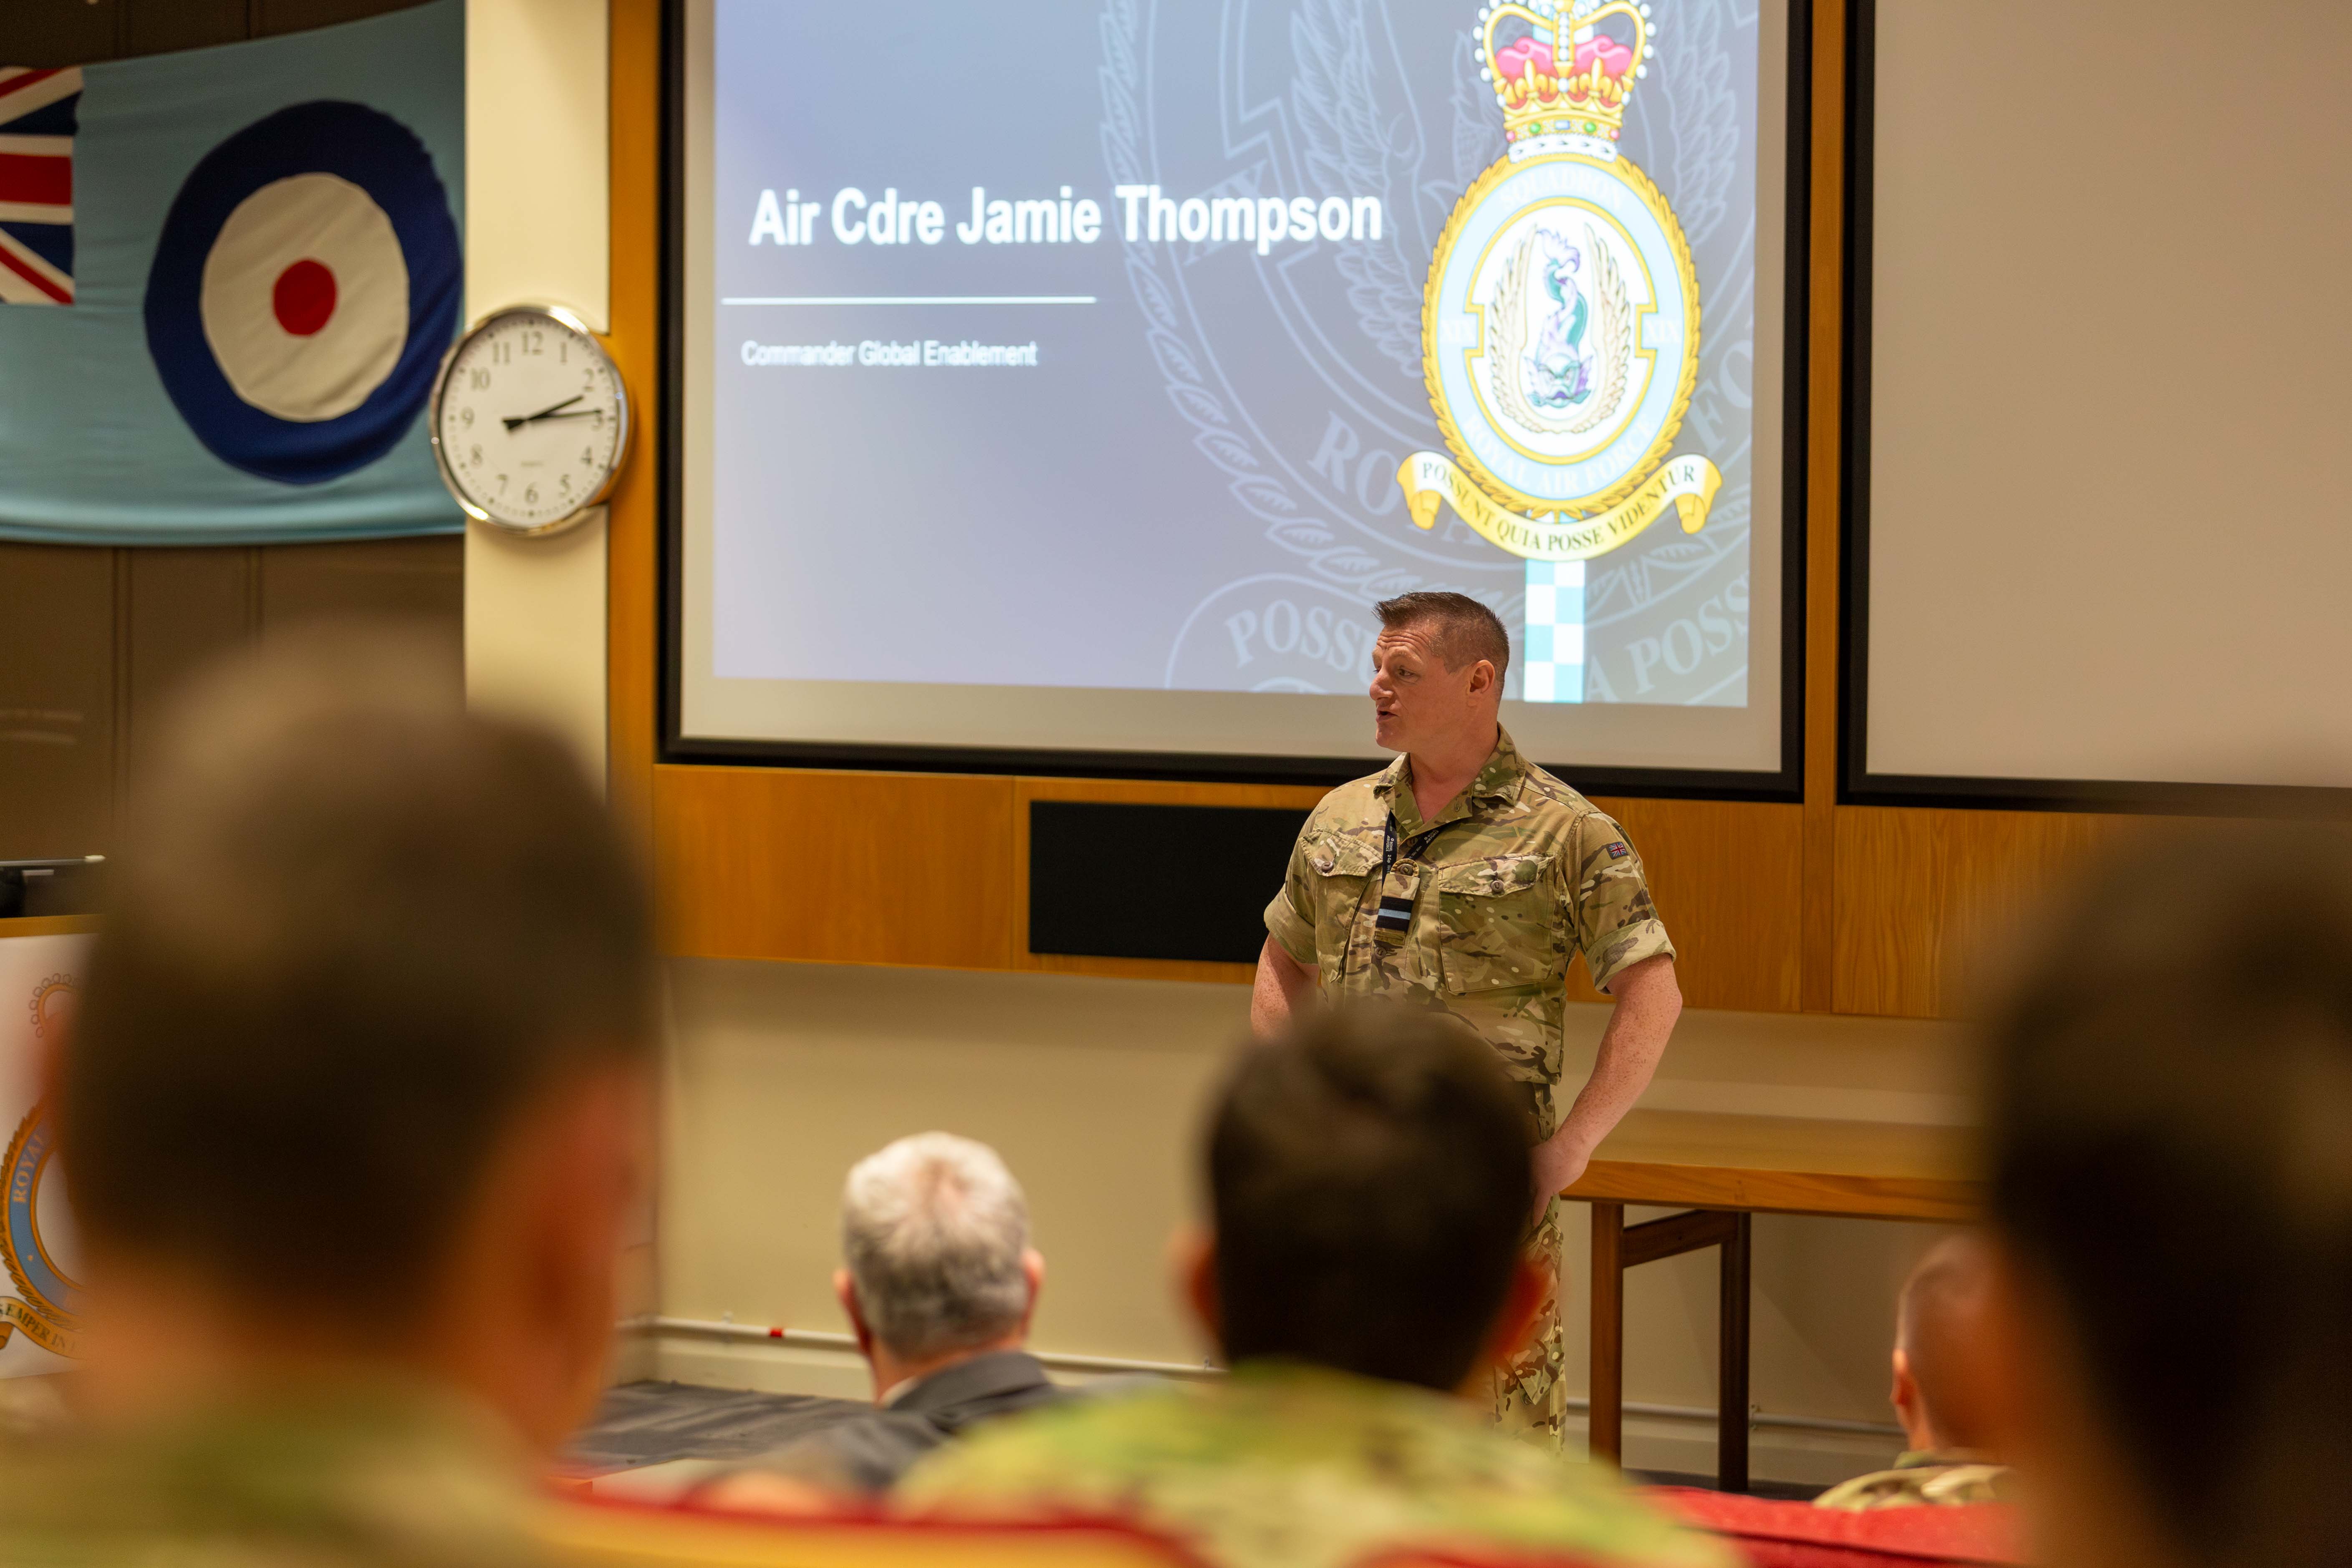 Air Commodore Jamie Thompson talks to the symposium